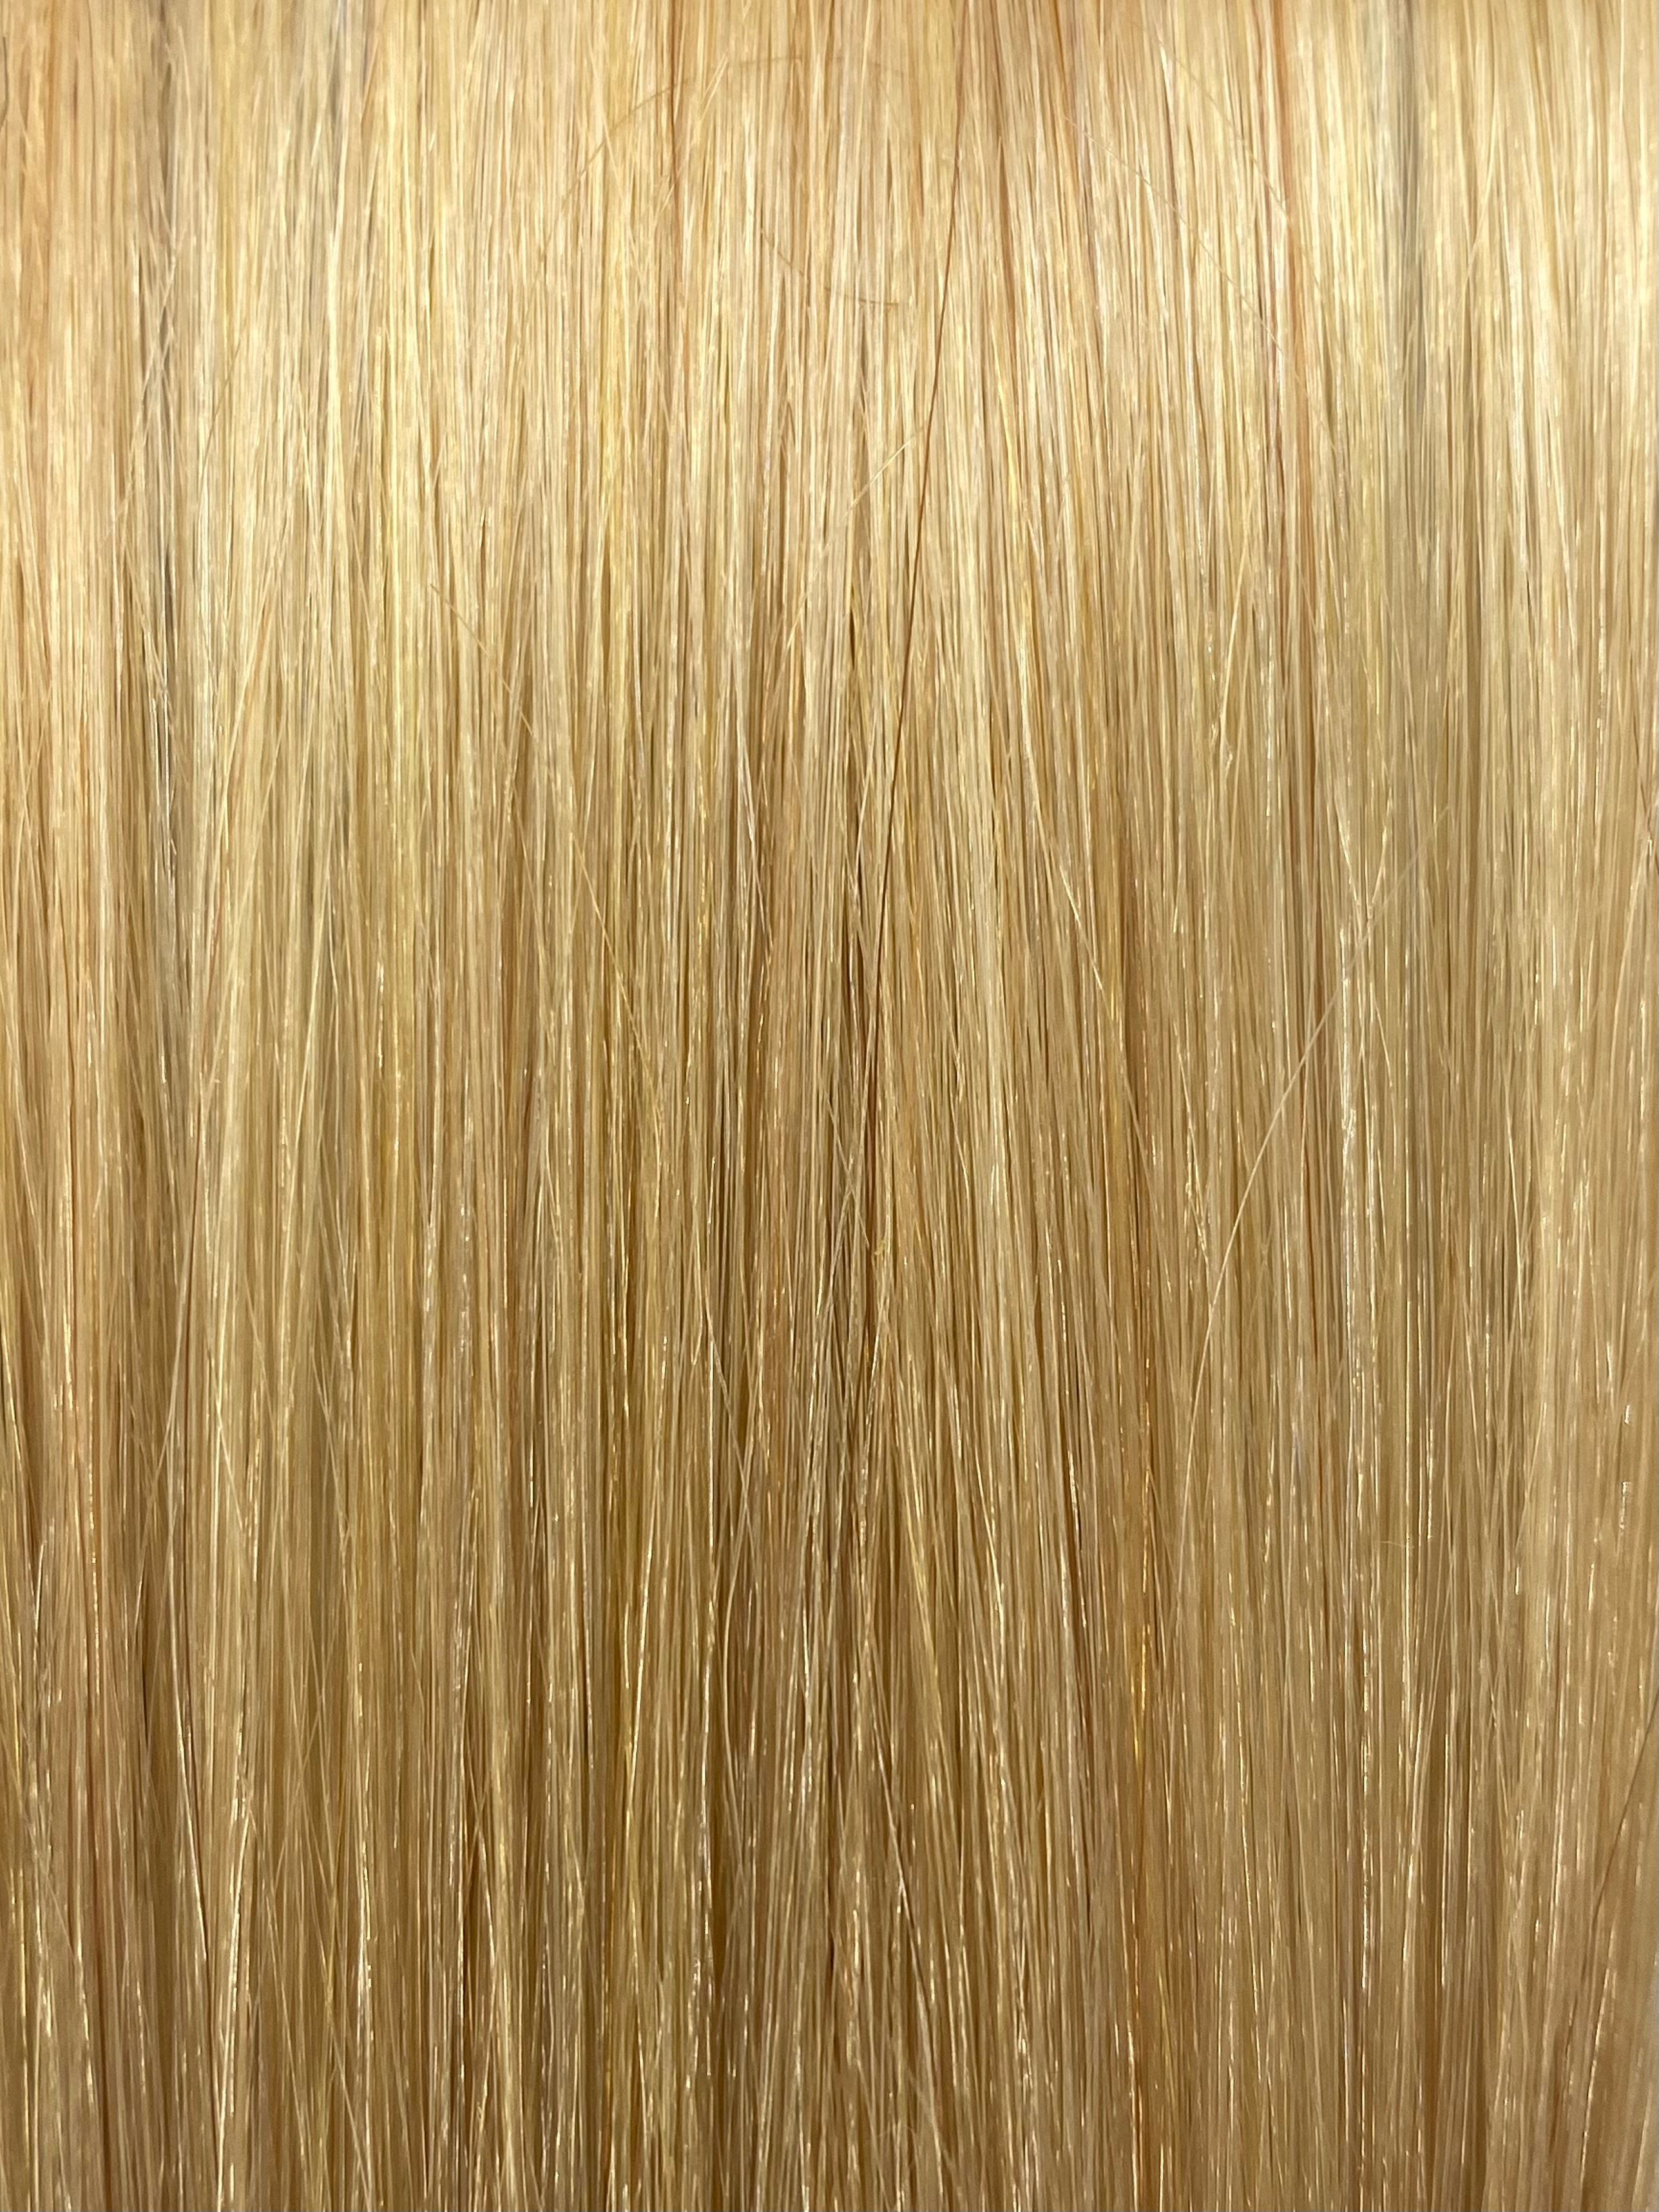 Tape #DB2 - 40cm/ 16 Inches - Light Golden Blonde - 16 Grams